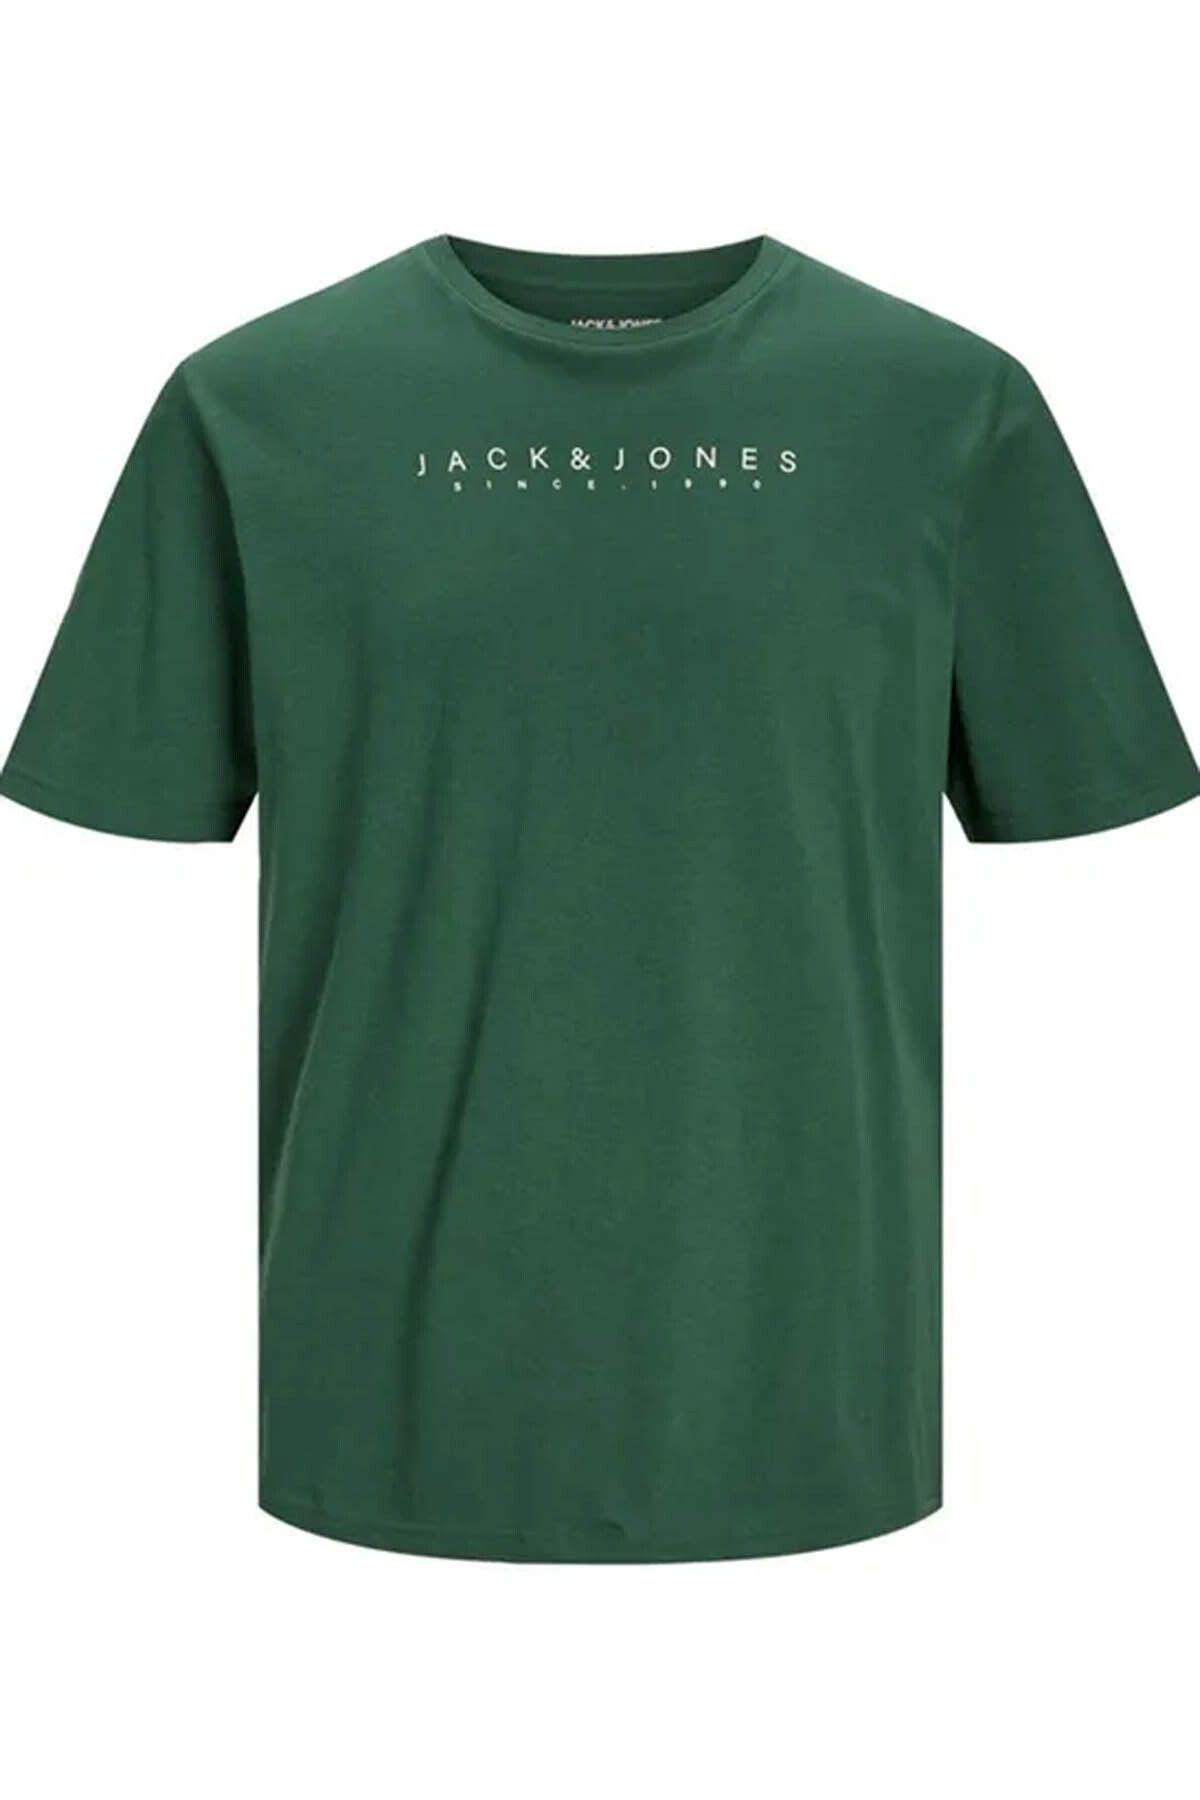 Jack & Jones Erkek T-shirt Koyu Yeşil 12247985